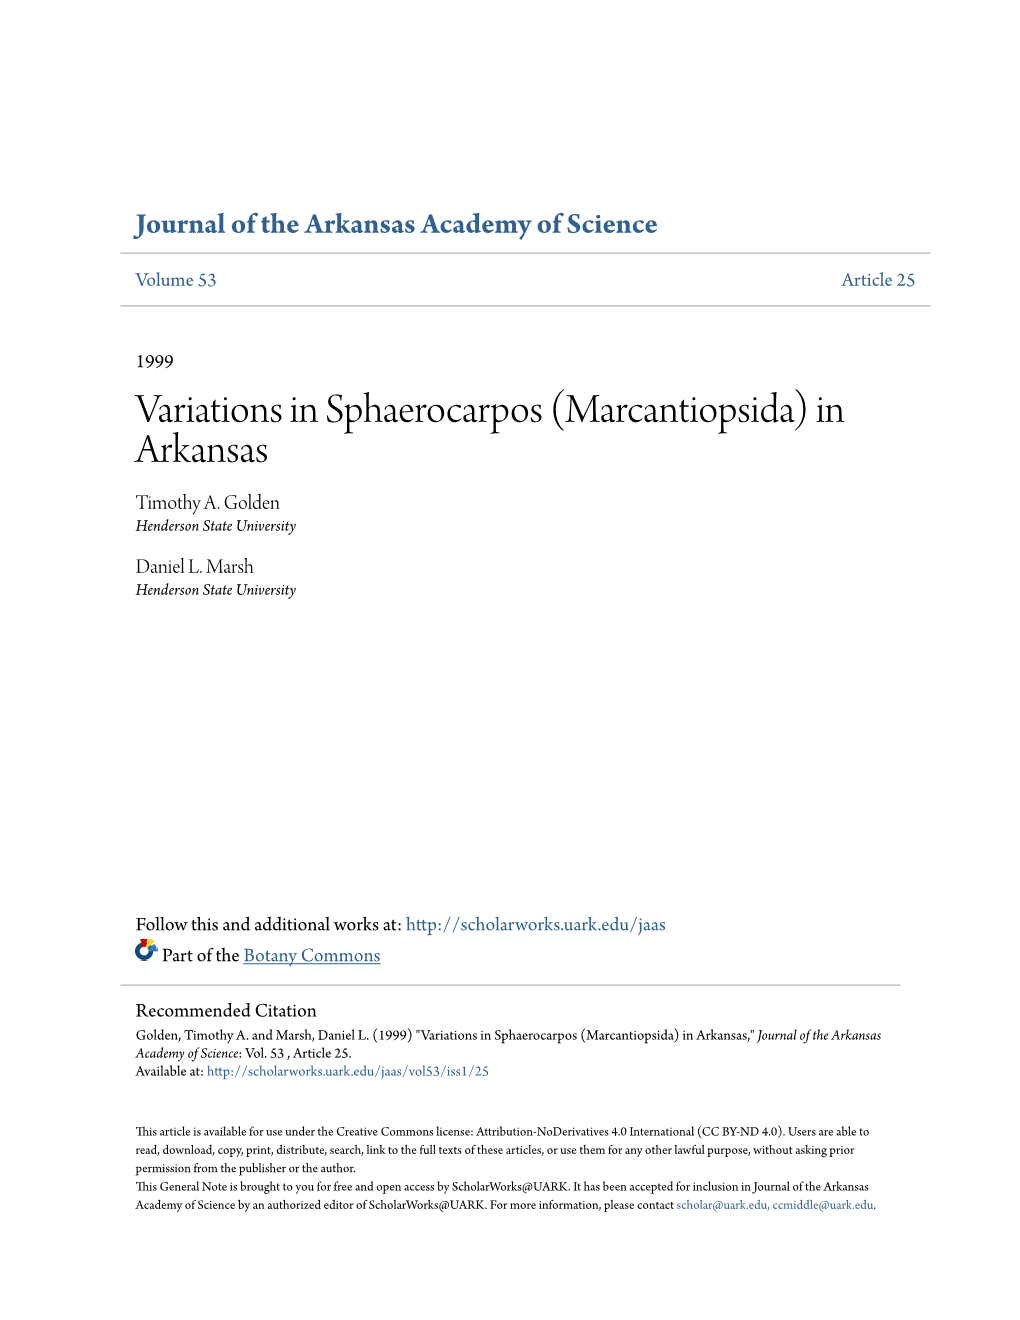 Variations in Sphaerocarpos (Marcantiopsida) in Arkansas Timothy A